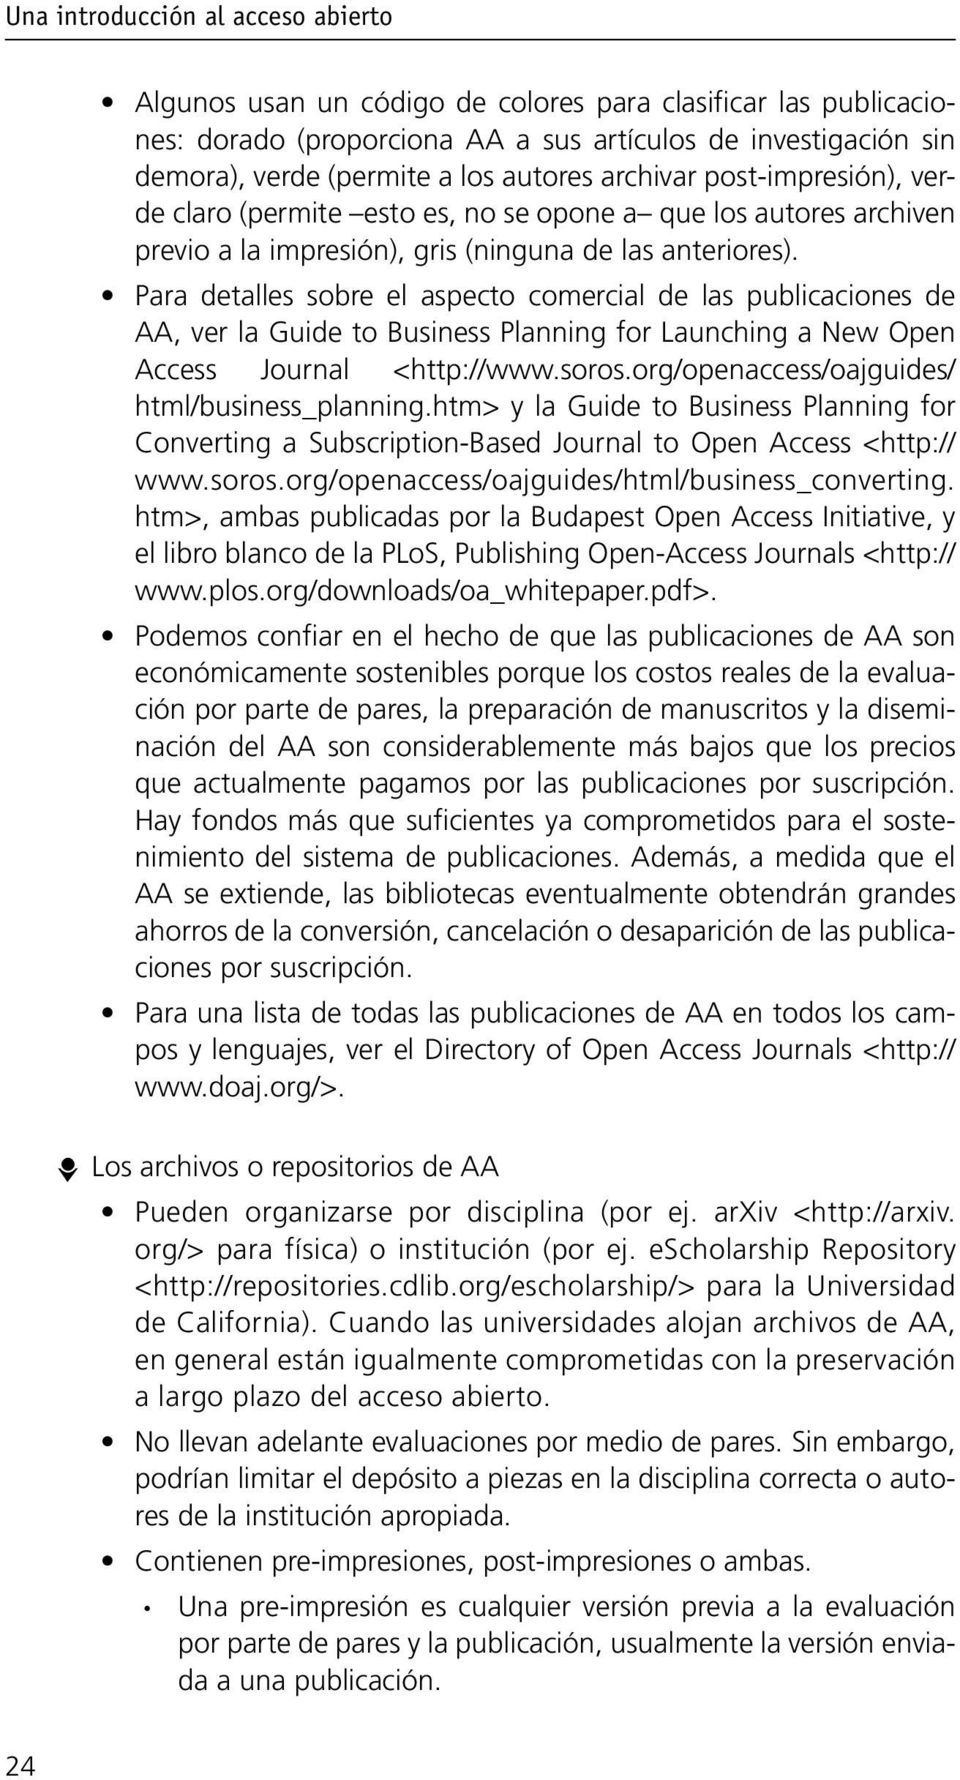 Para detalles sobre el aspecto comercial de las publicaciones de AA, ver la Guide to Business Planning for Launching a New Open Access Journal <http://www.soros.